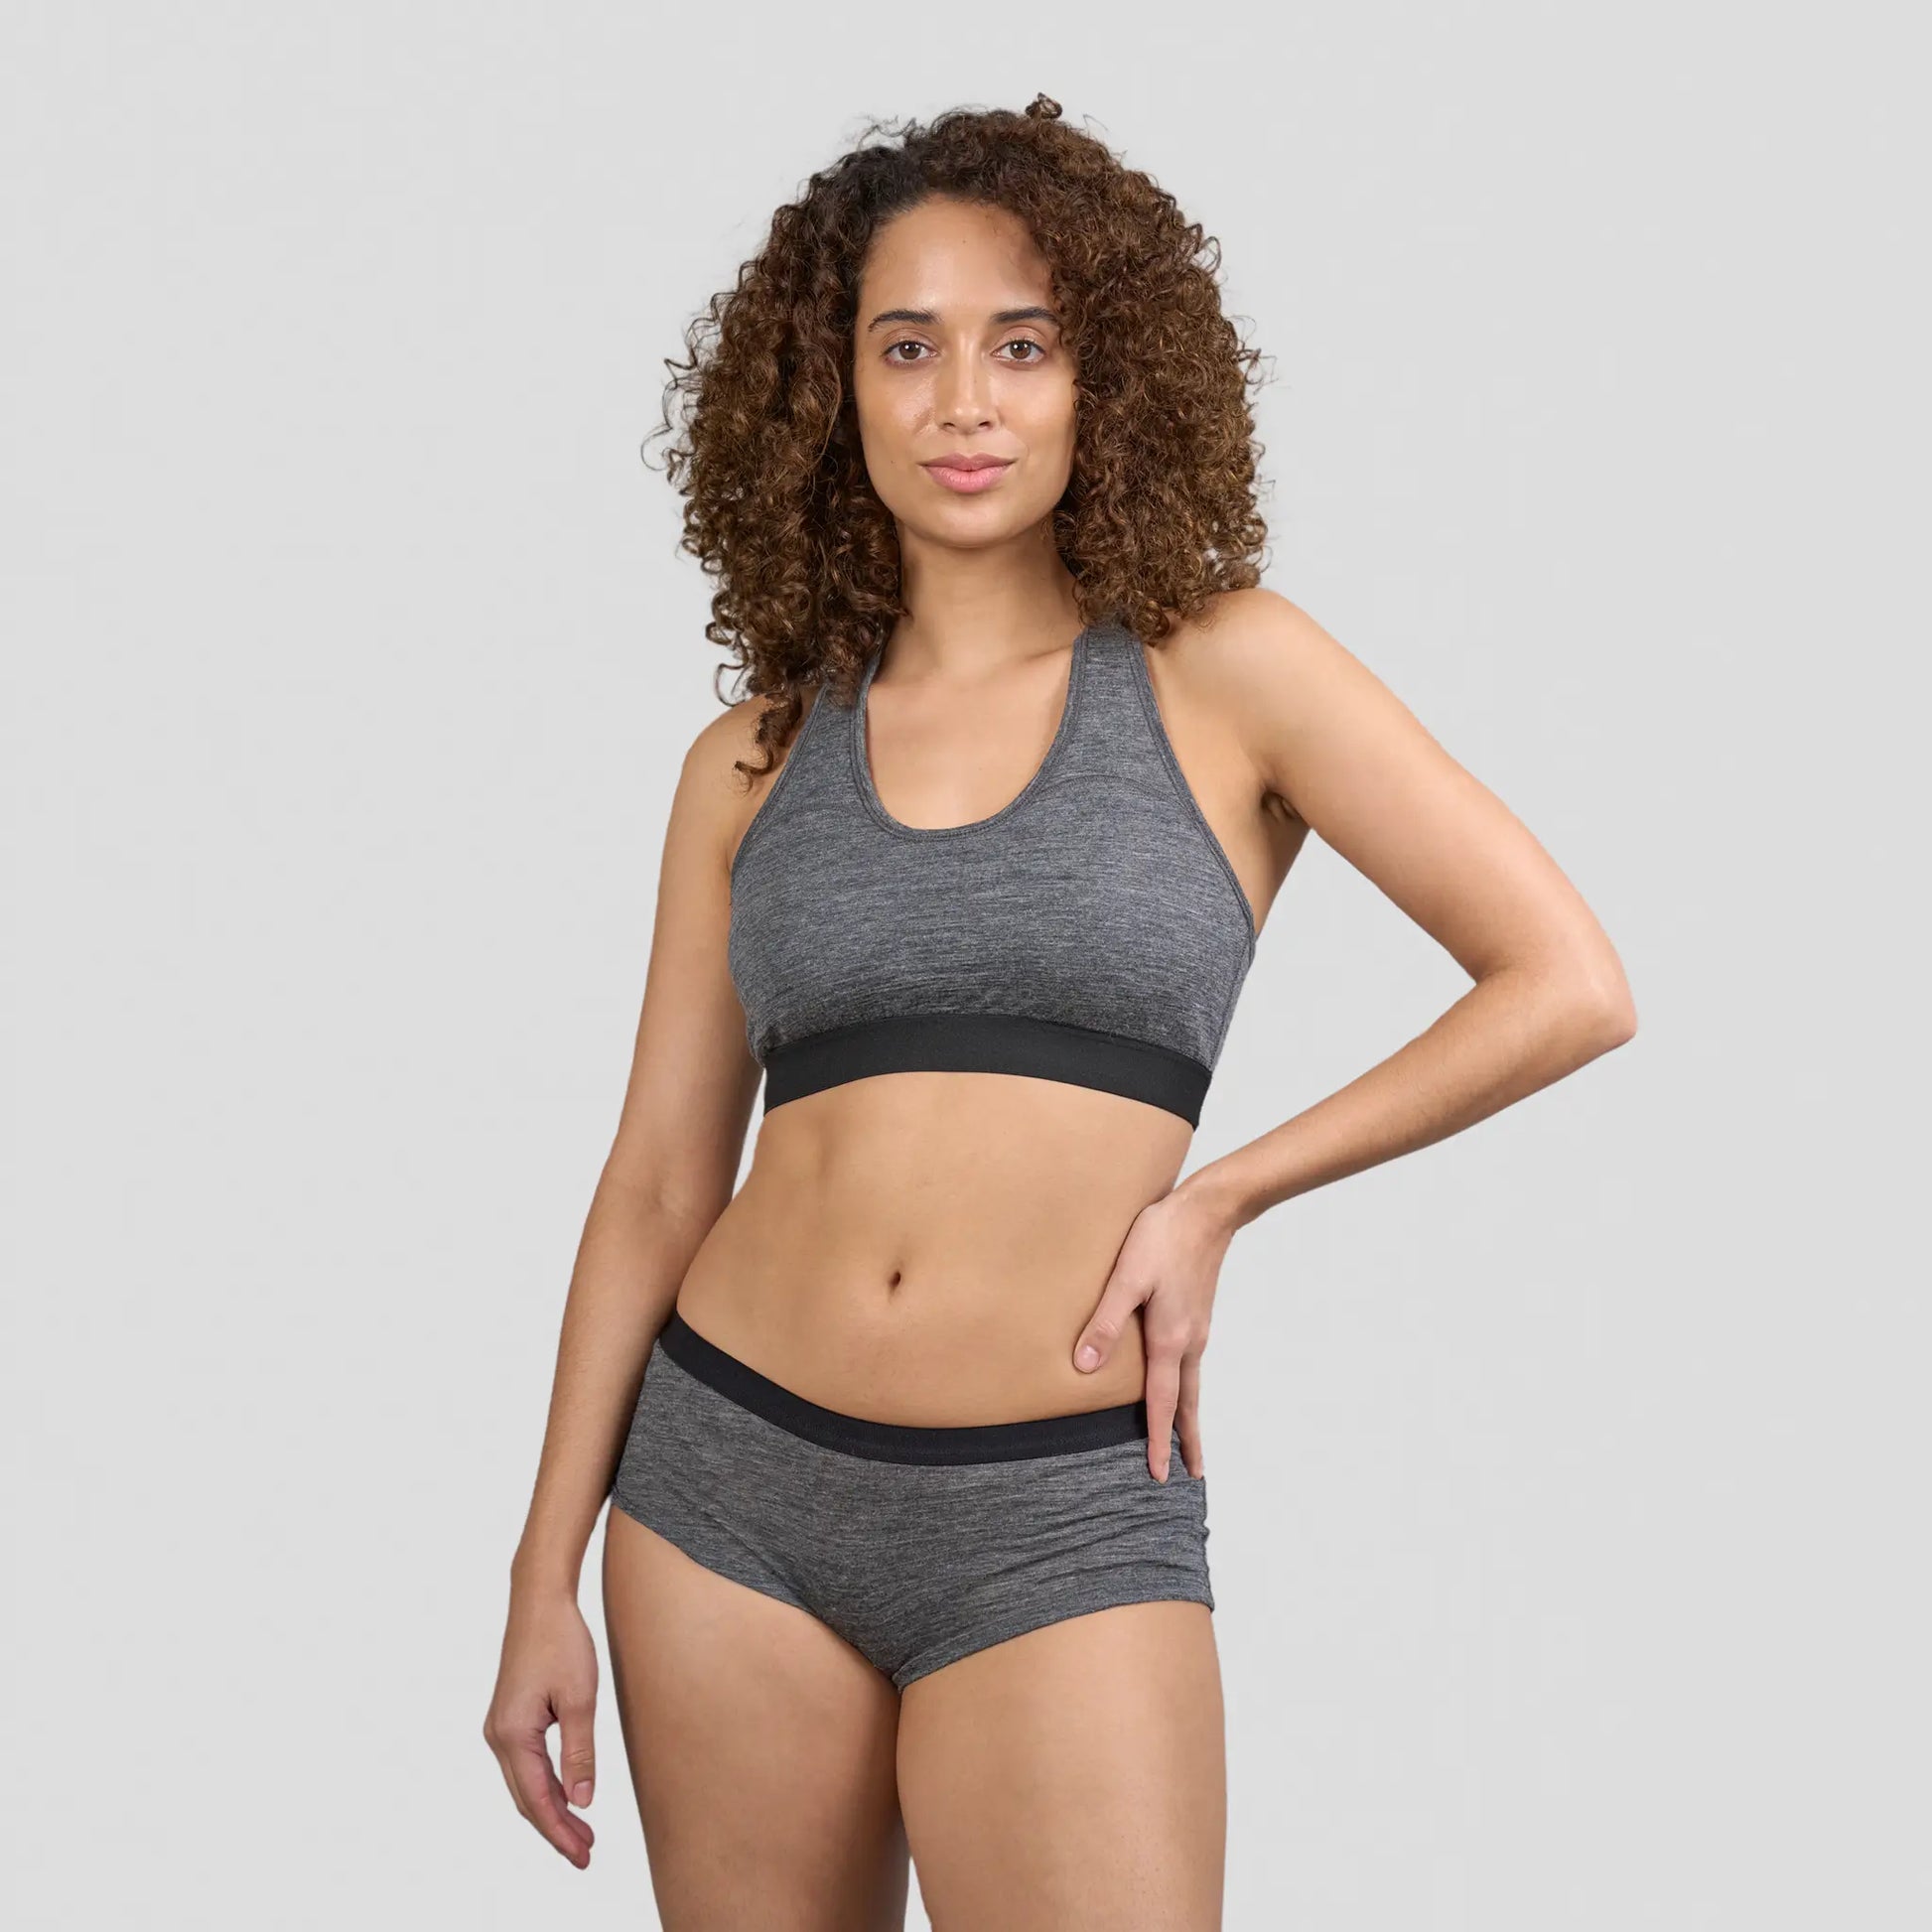 Footprint】 Women's Sports Bra Push Up Fitness Bra Yoga Bra Sport Underwear  Running Gym Fitness Tops Black White Letters Seamless Underwear